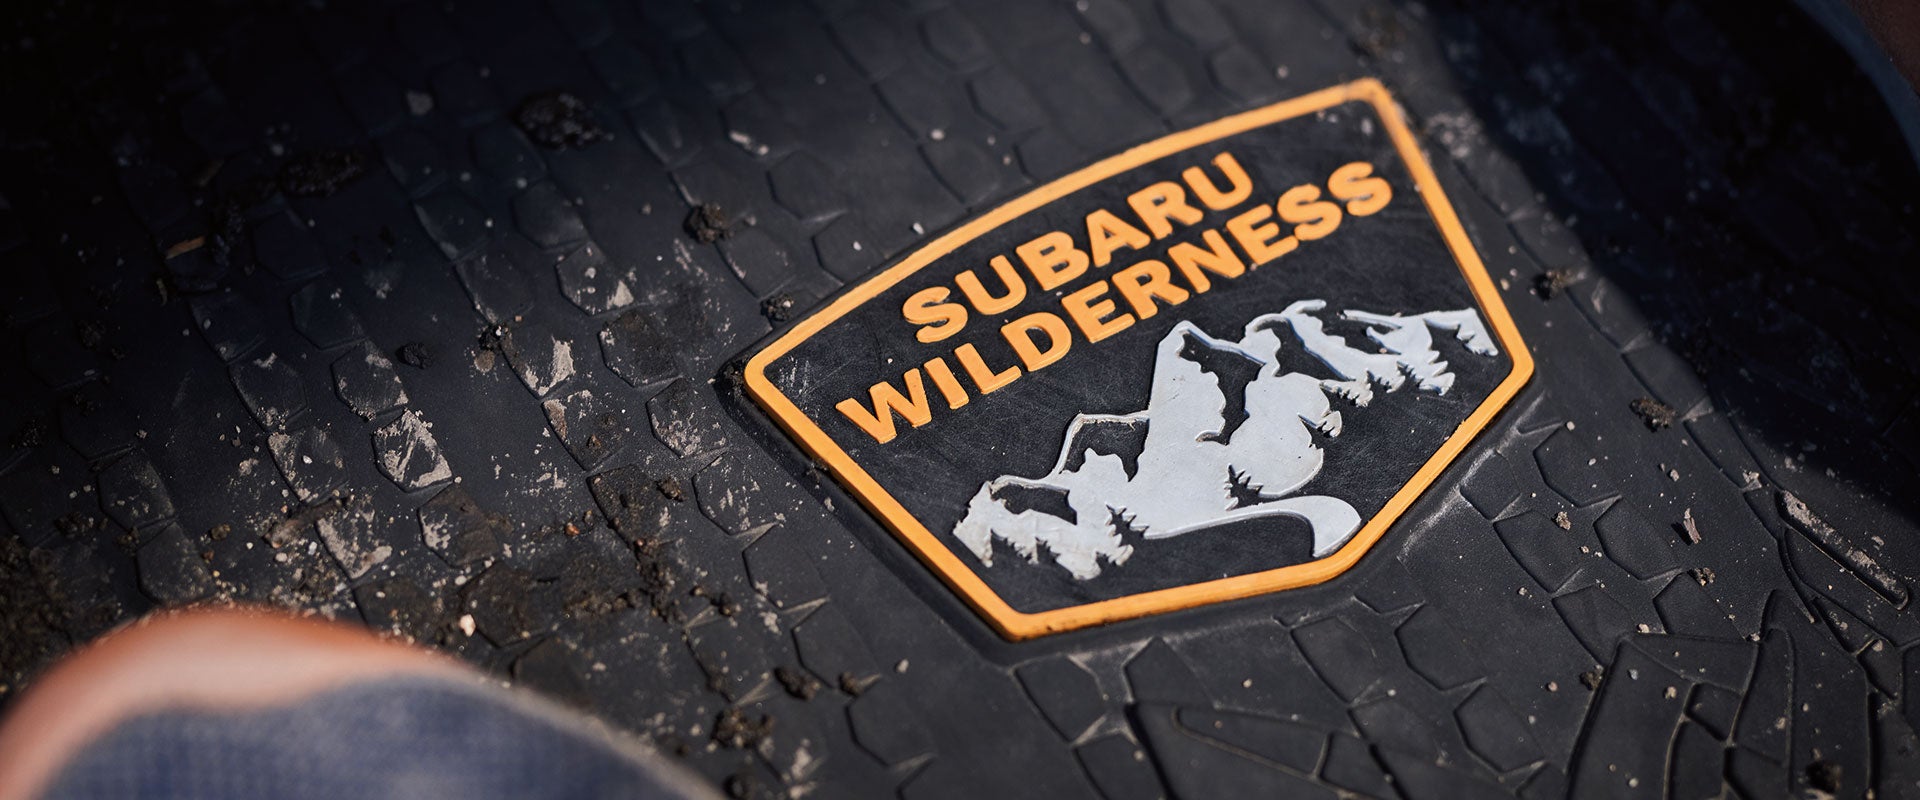 Subaru Wilderness badge on interior cabin weather mat